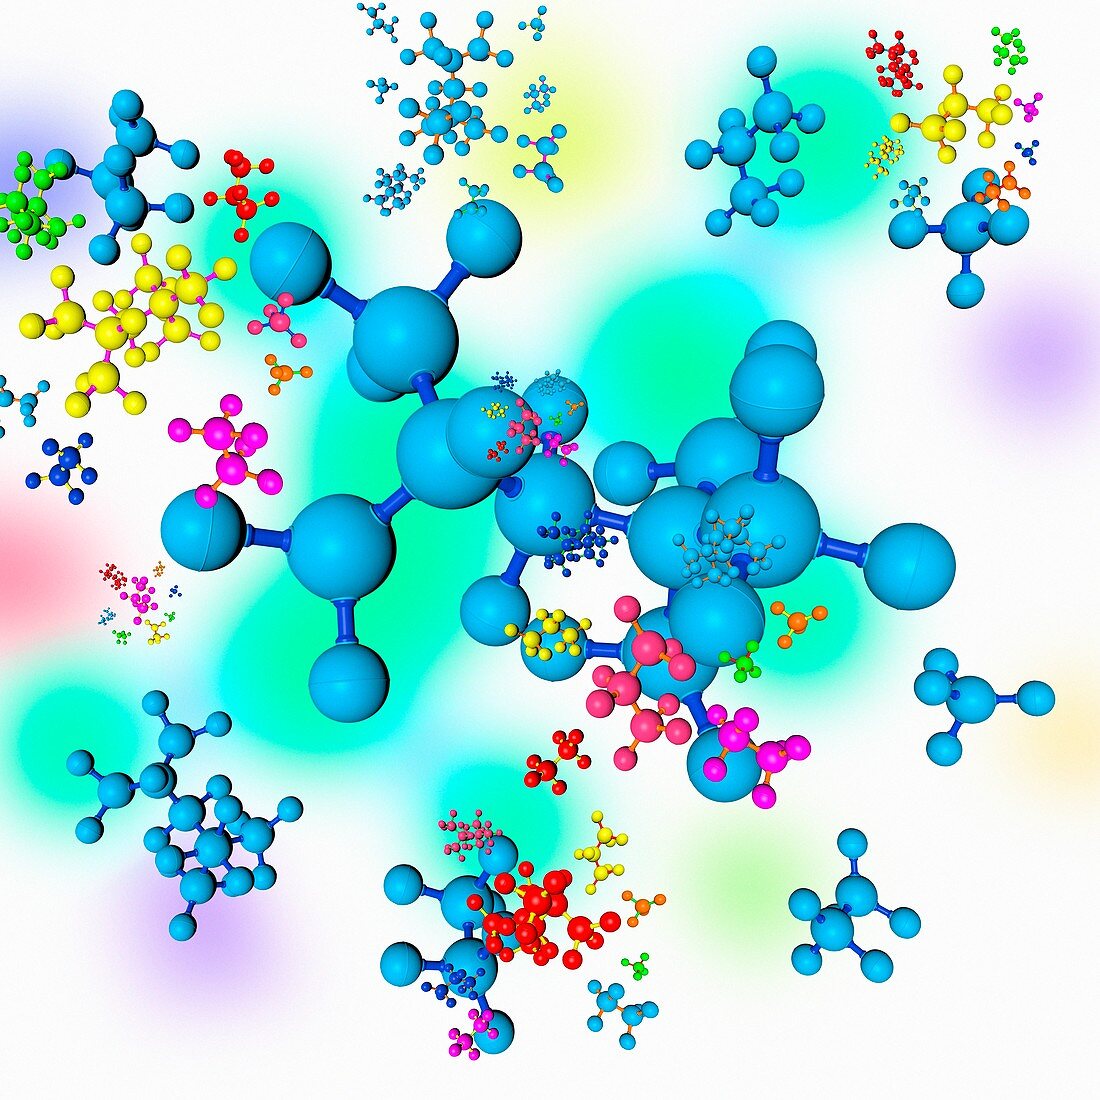 Molecules, illustration